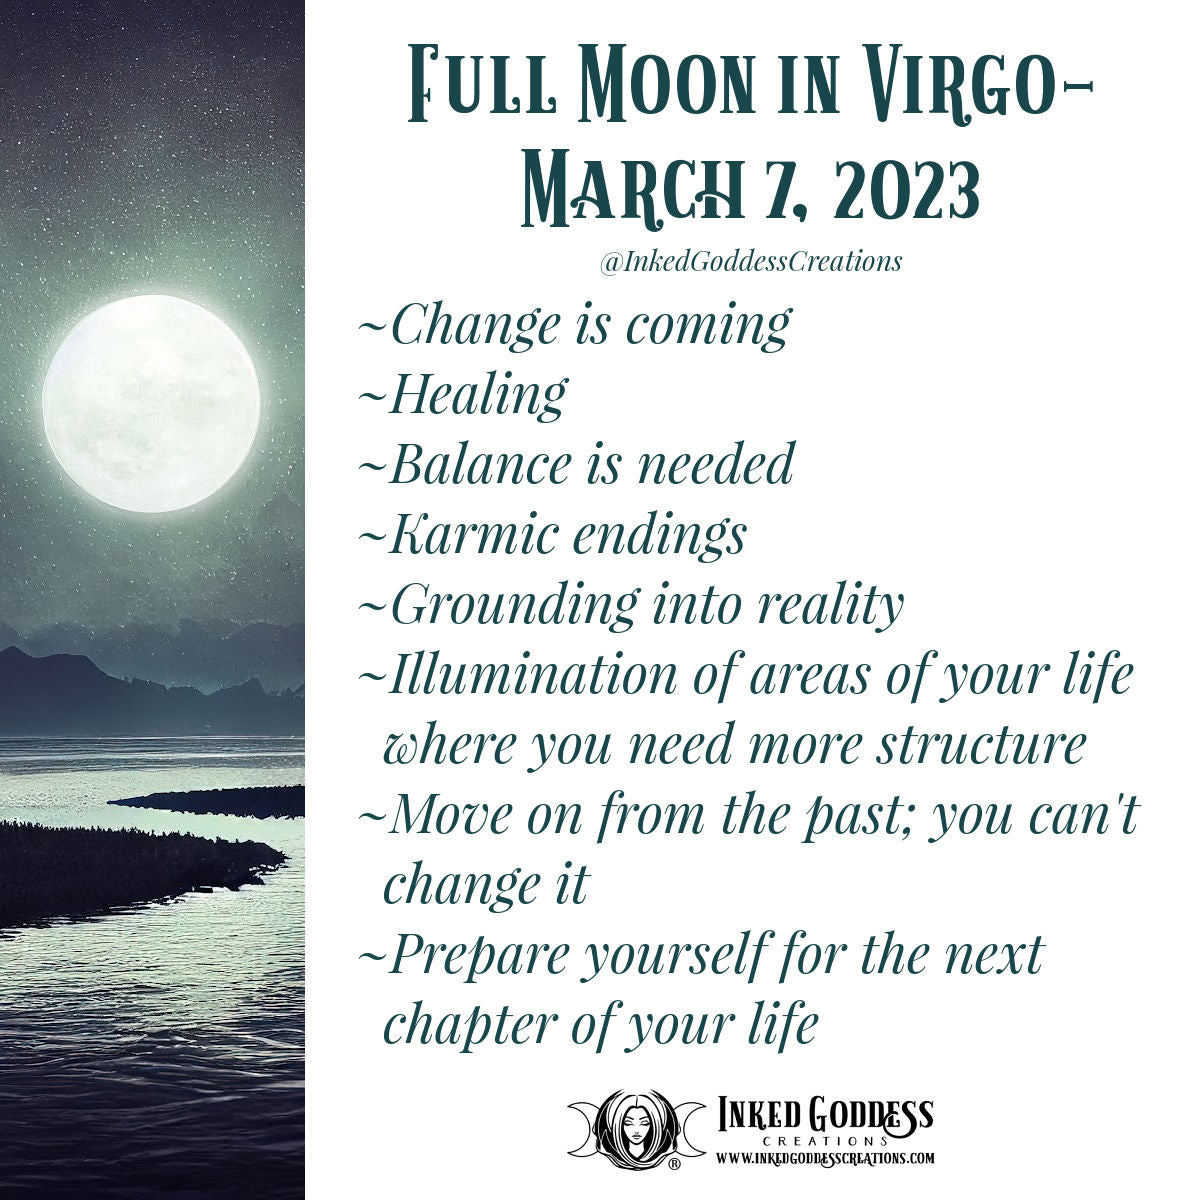 Full Moon in Virgo March 7, 2023